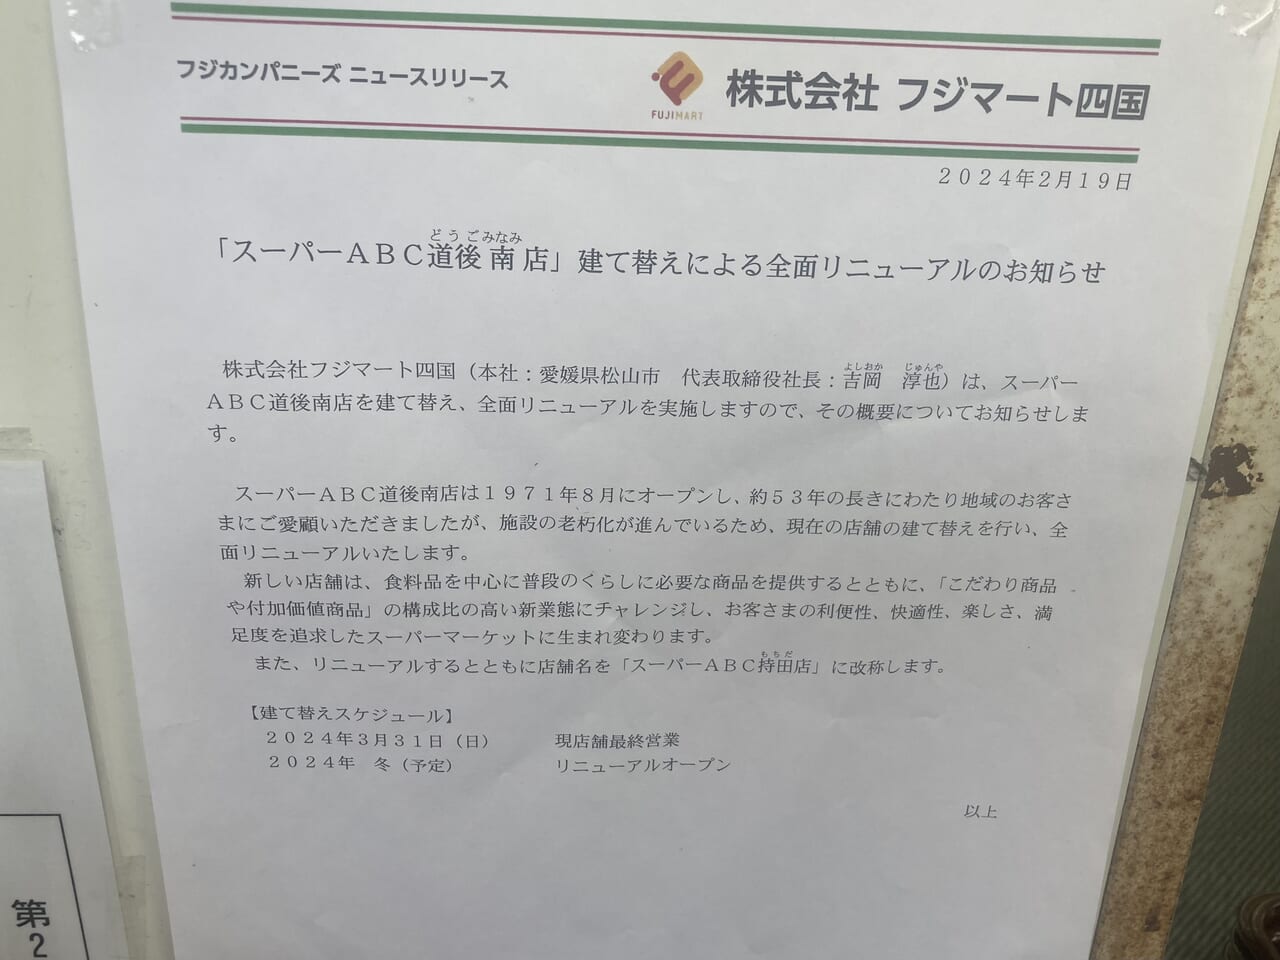 ABC マート道後南店改装のお知らせ